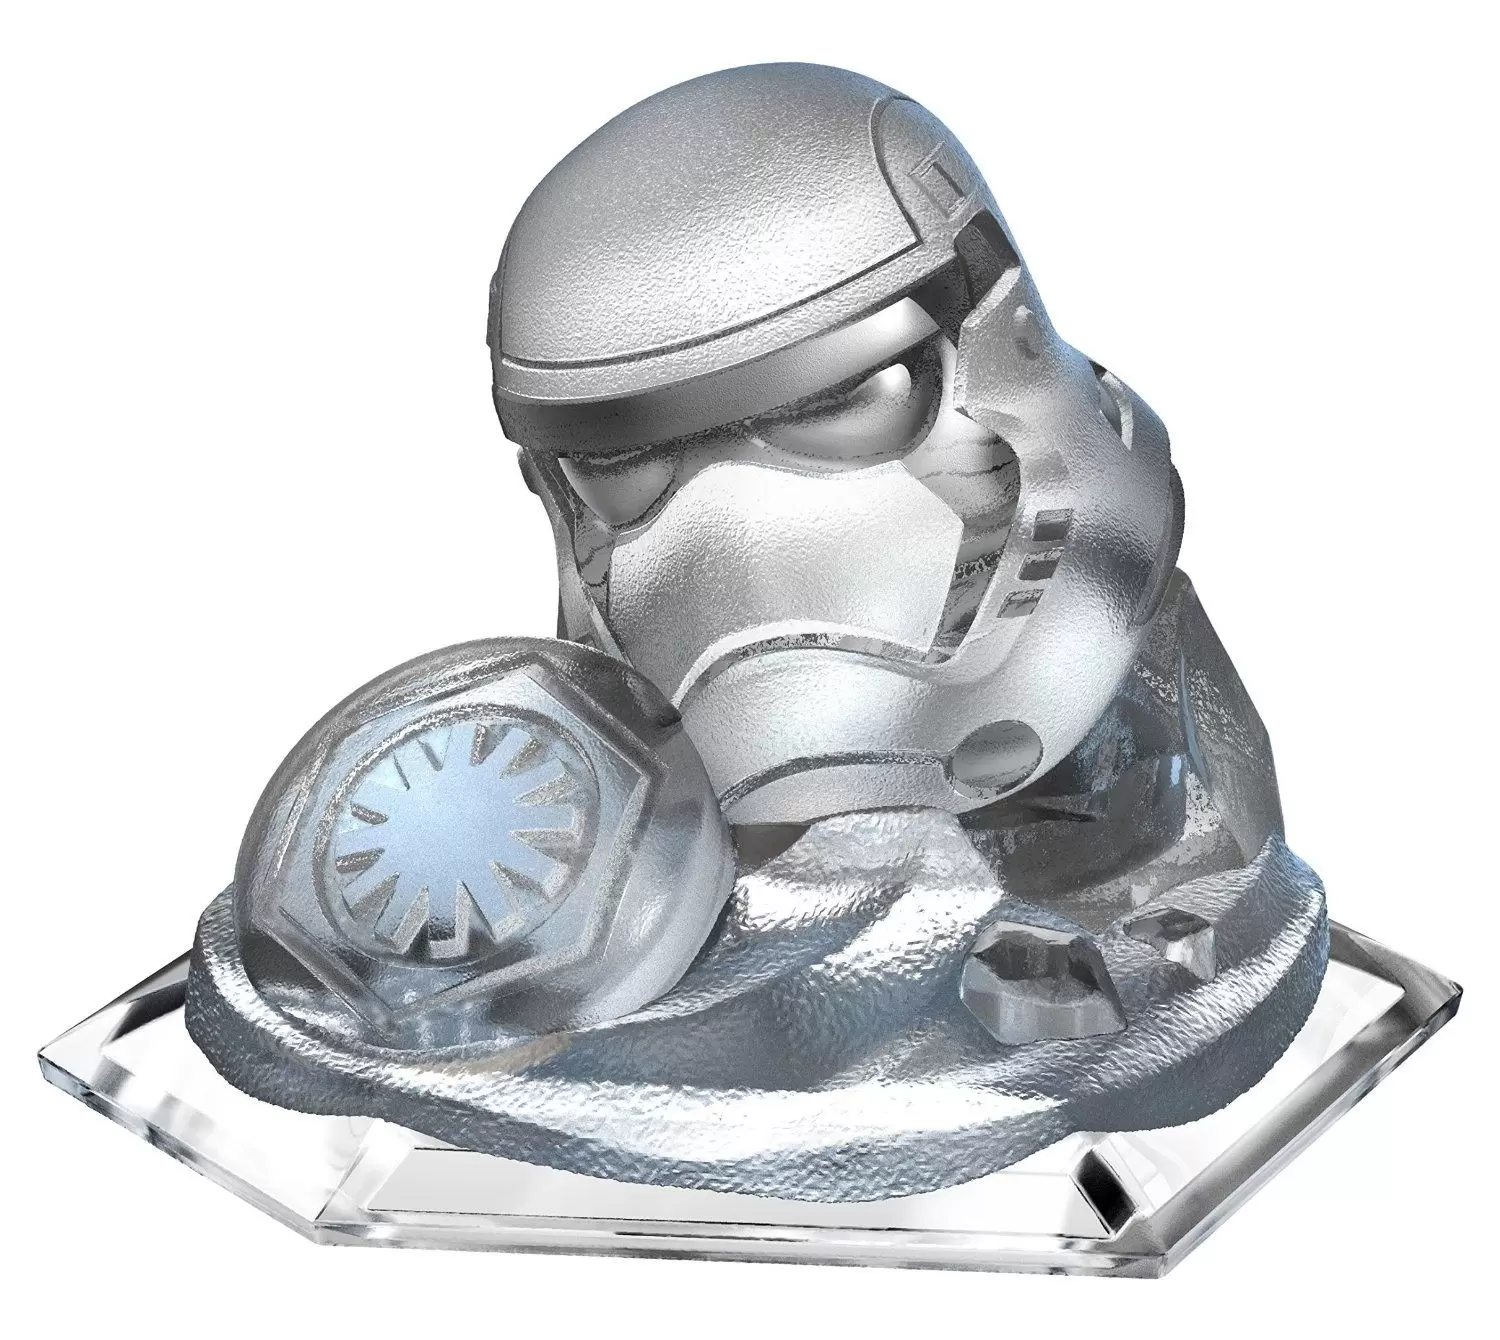 Disney Infinity Playset trophys - The force Awakens Trophy